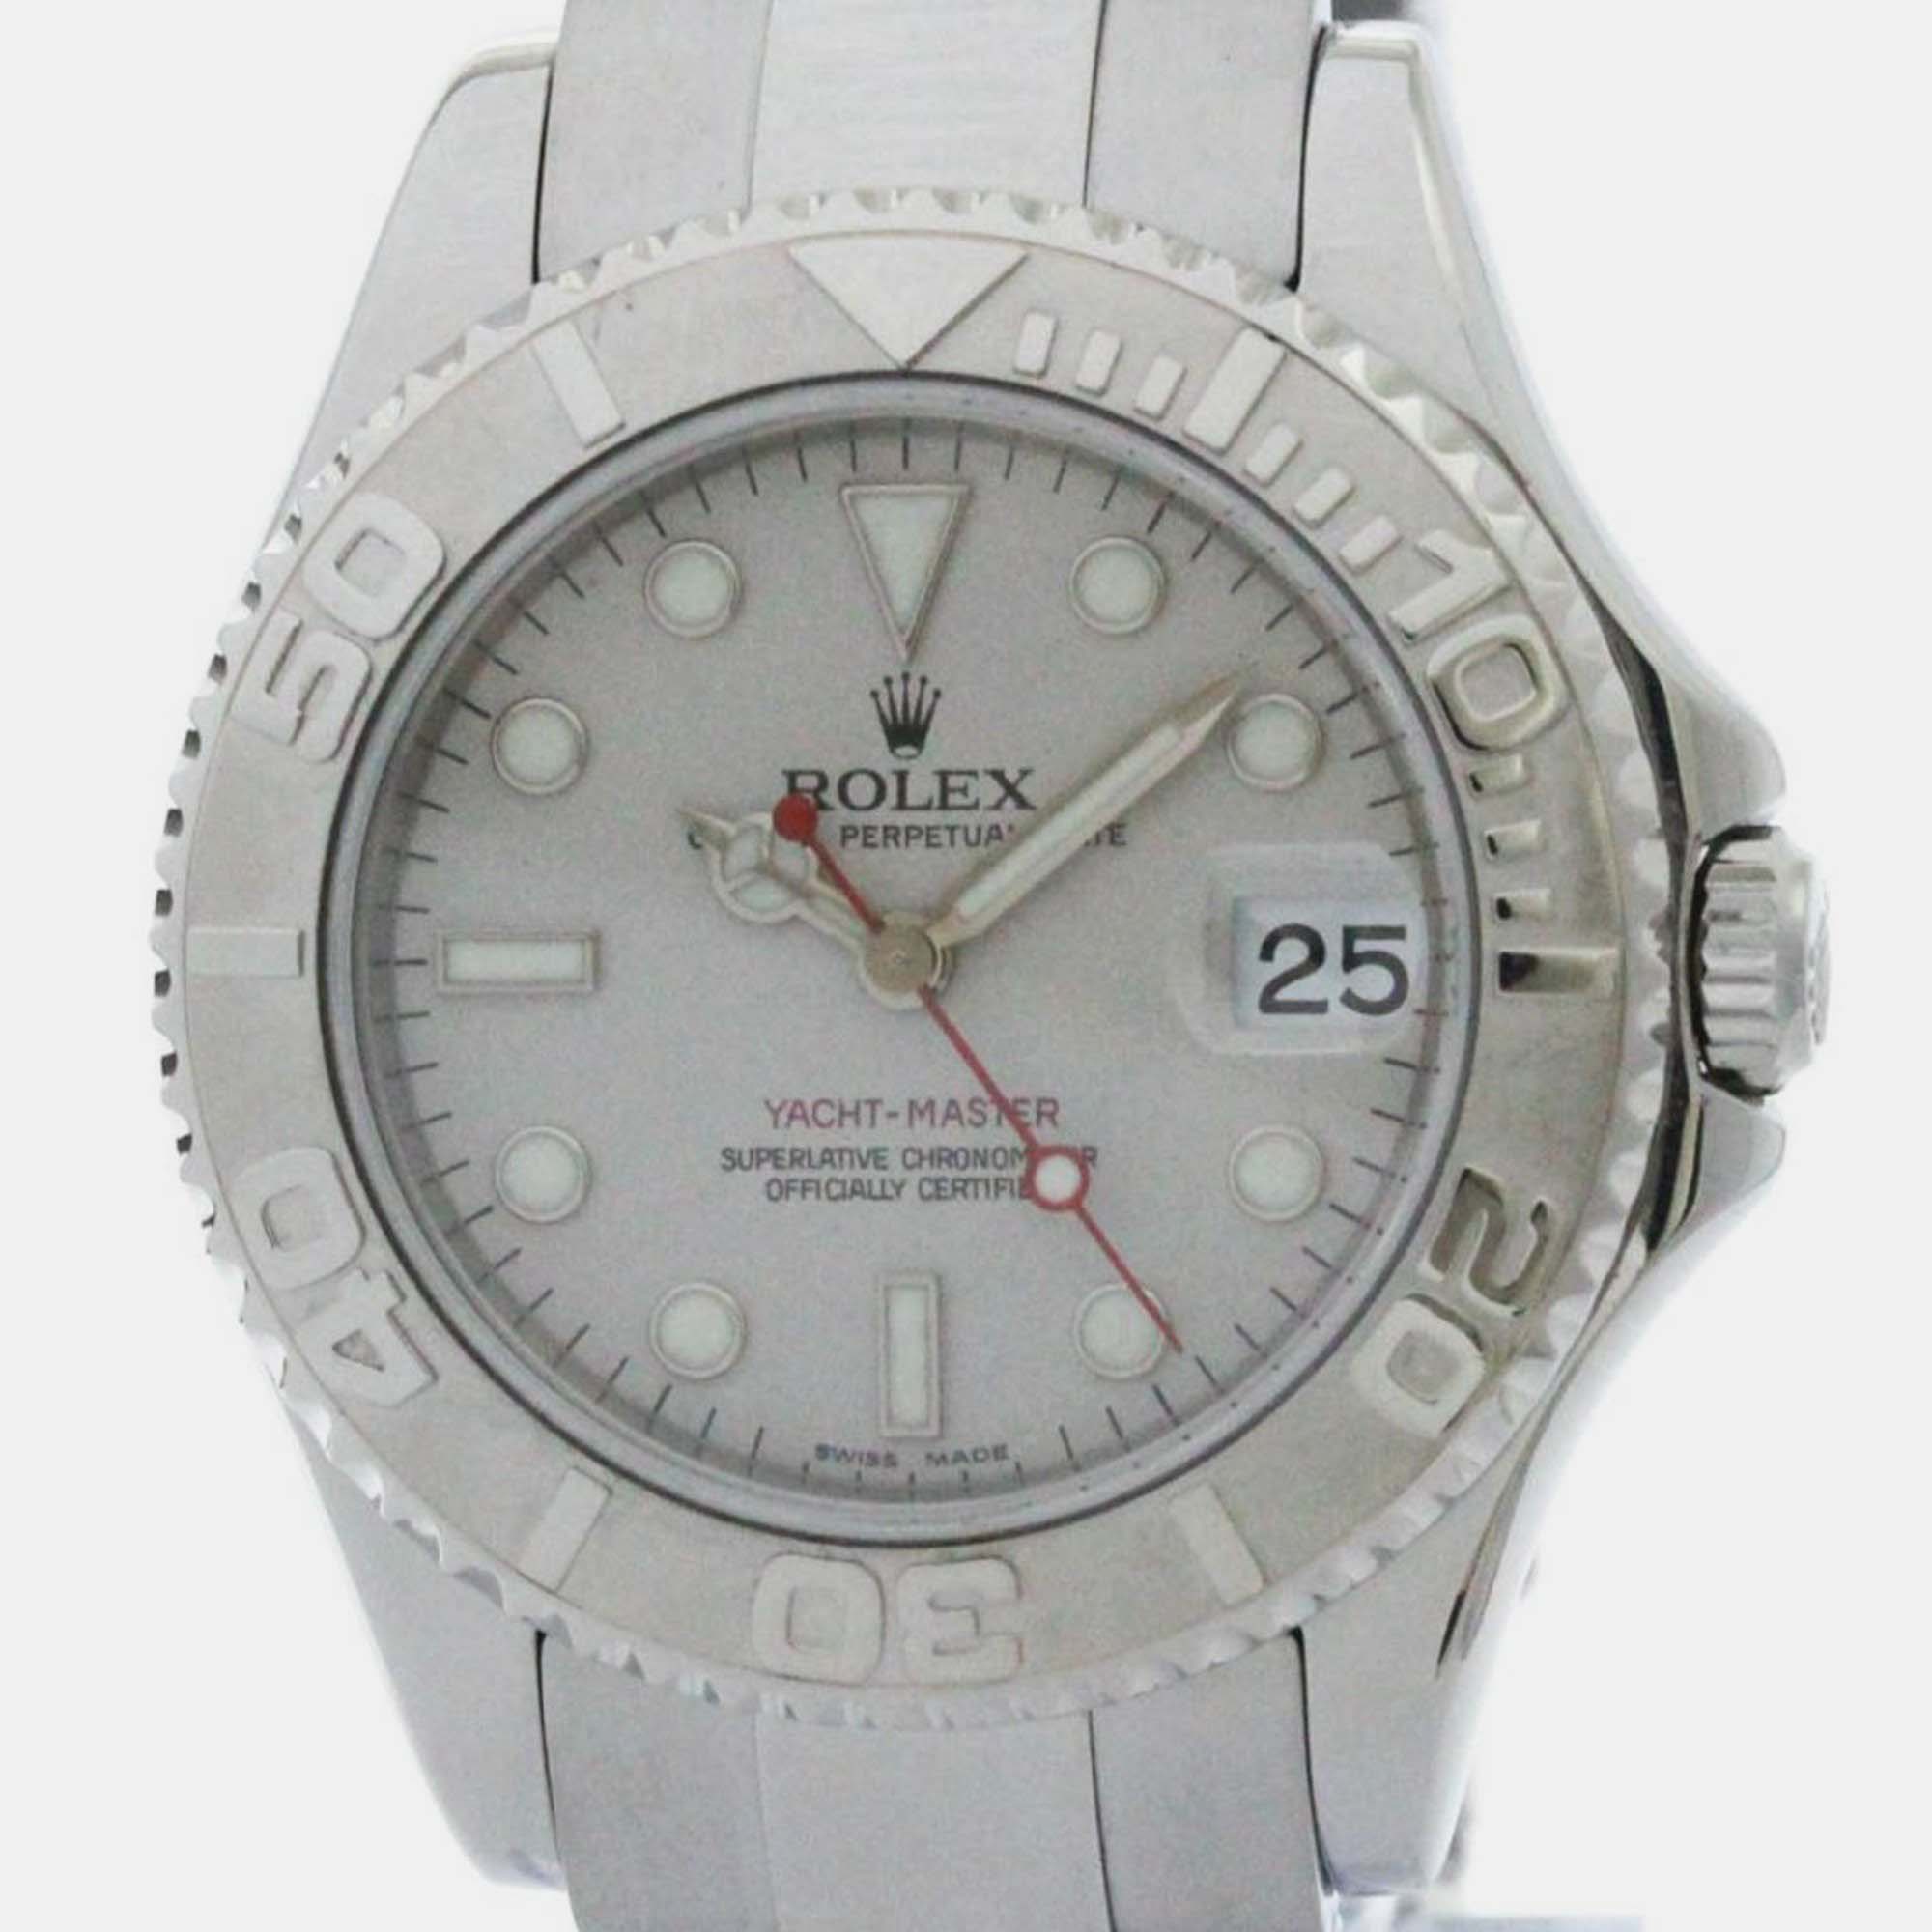 Rolex silver platinum stainless steel yacht-master 168622 automatic men's wristwatch 35 mm